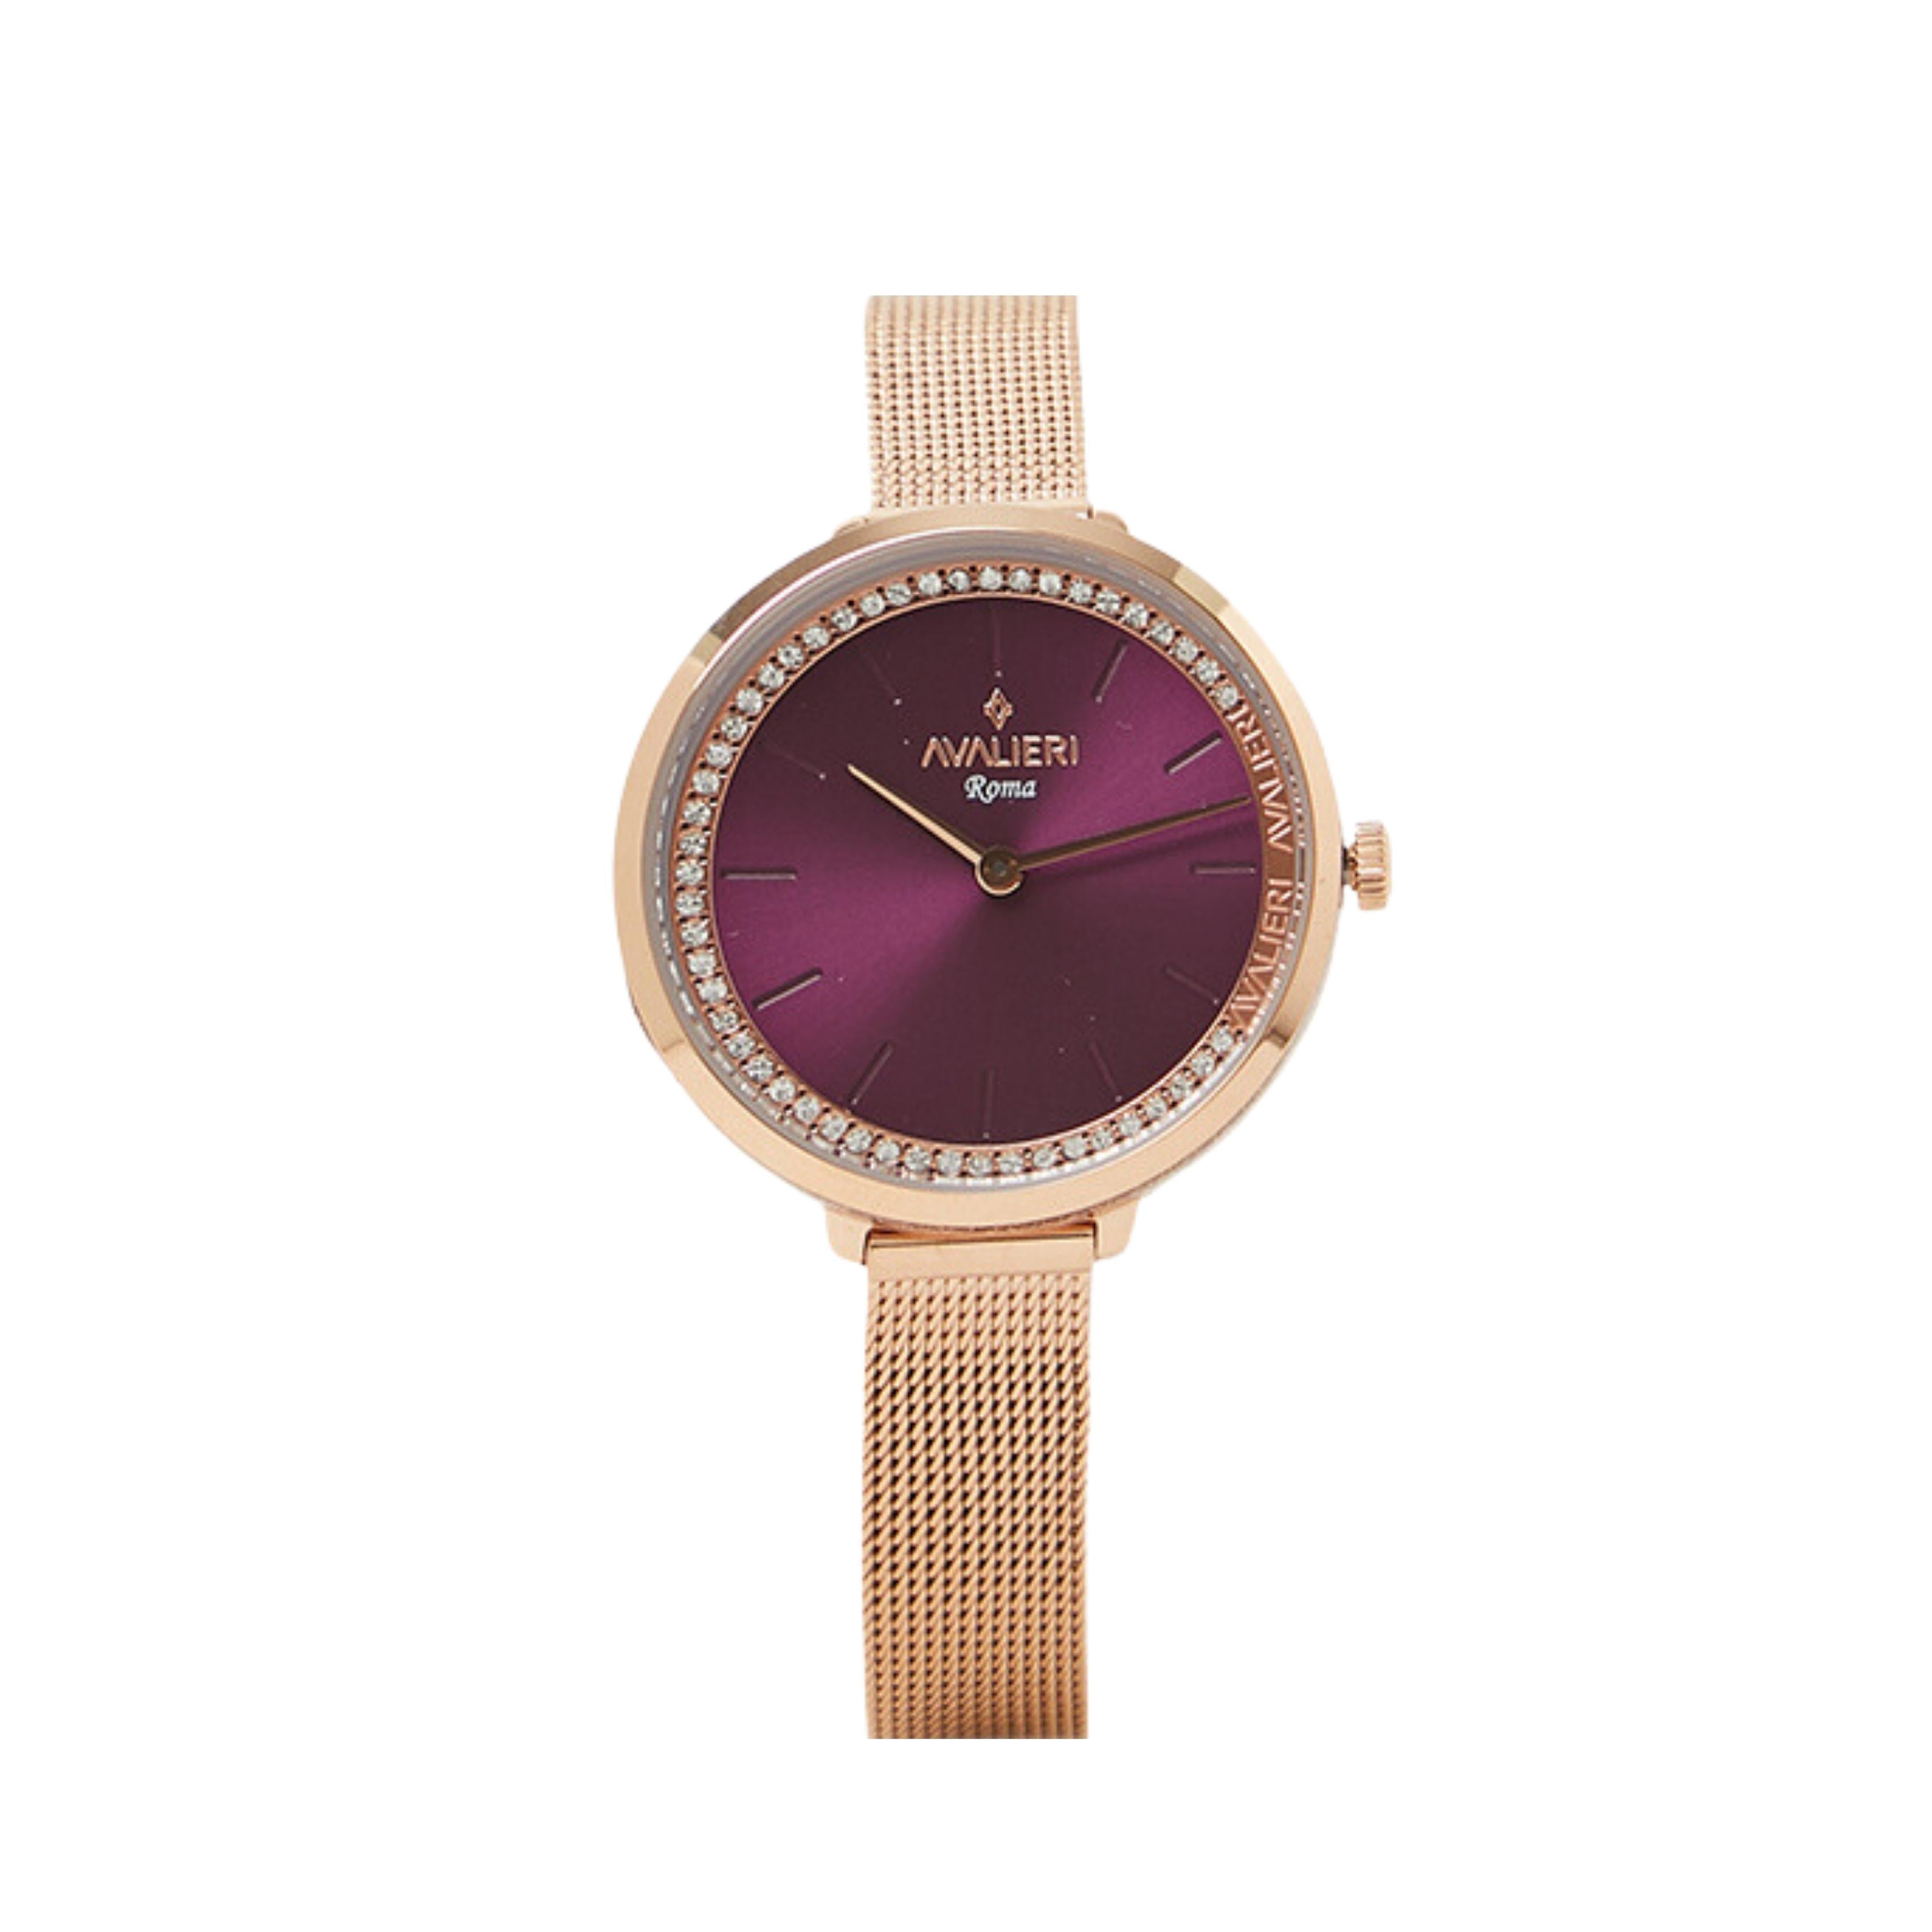 Avalieri Women's Quartz Watch Purple Dial - AV-2594B